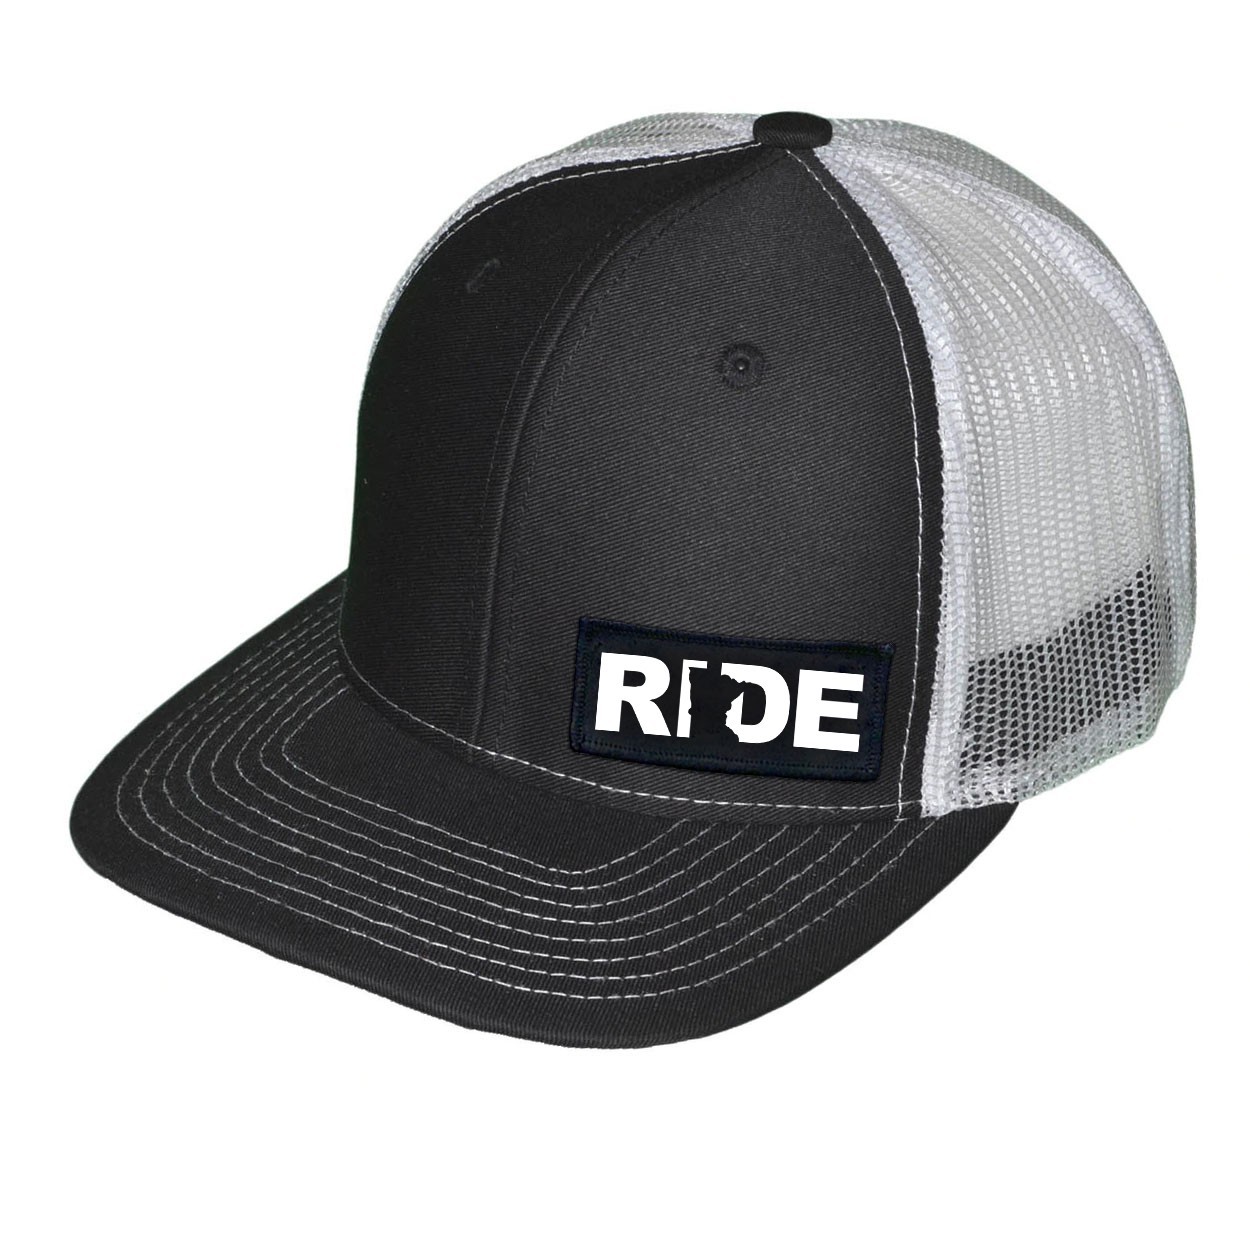 Ride Minnesota Night Out Woven Patch Snapback Trucker Hat Black/White (White Logo)